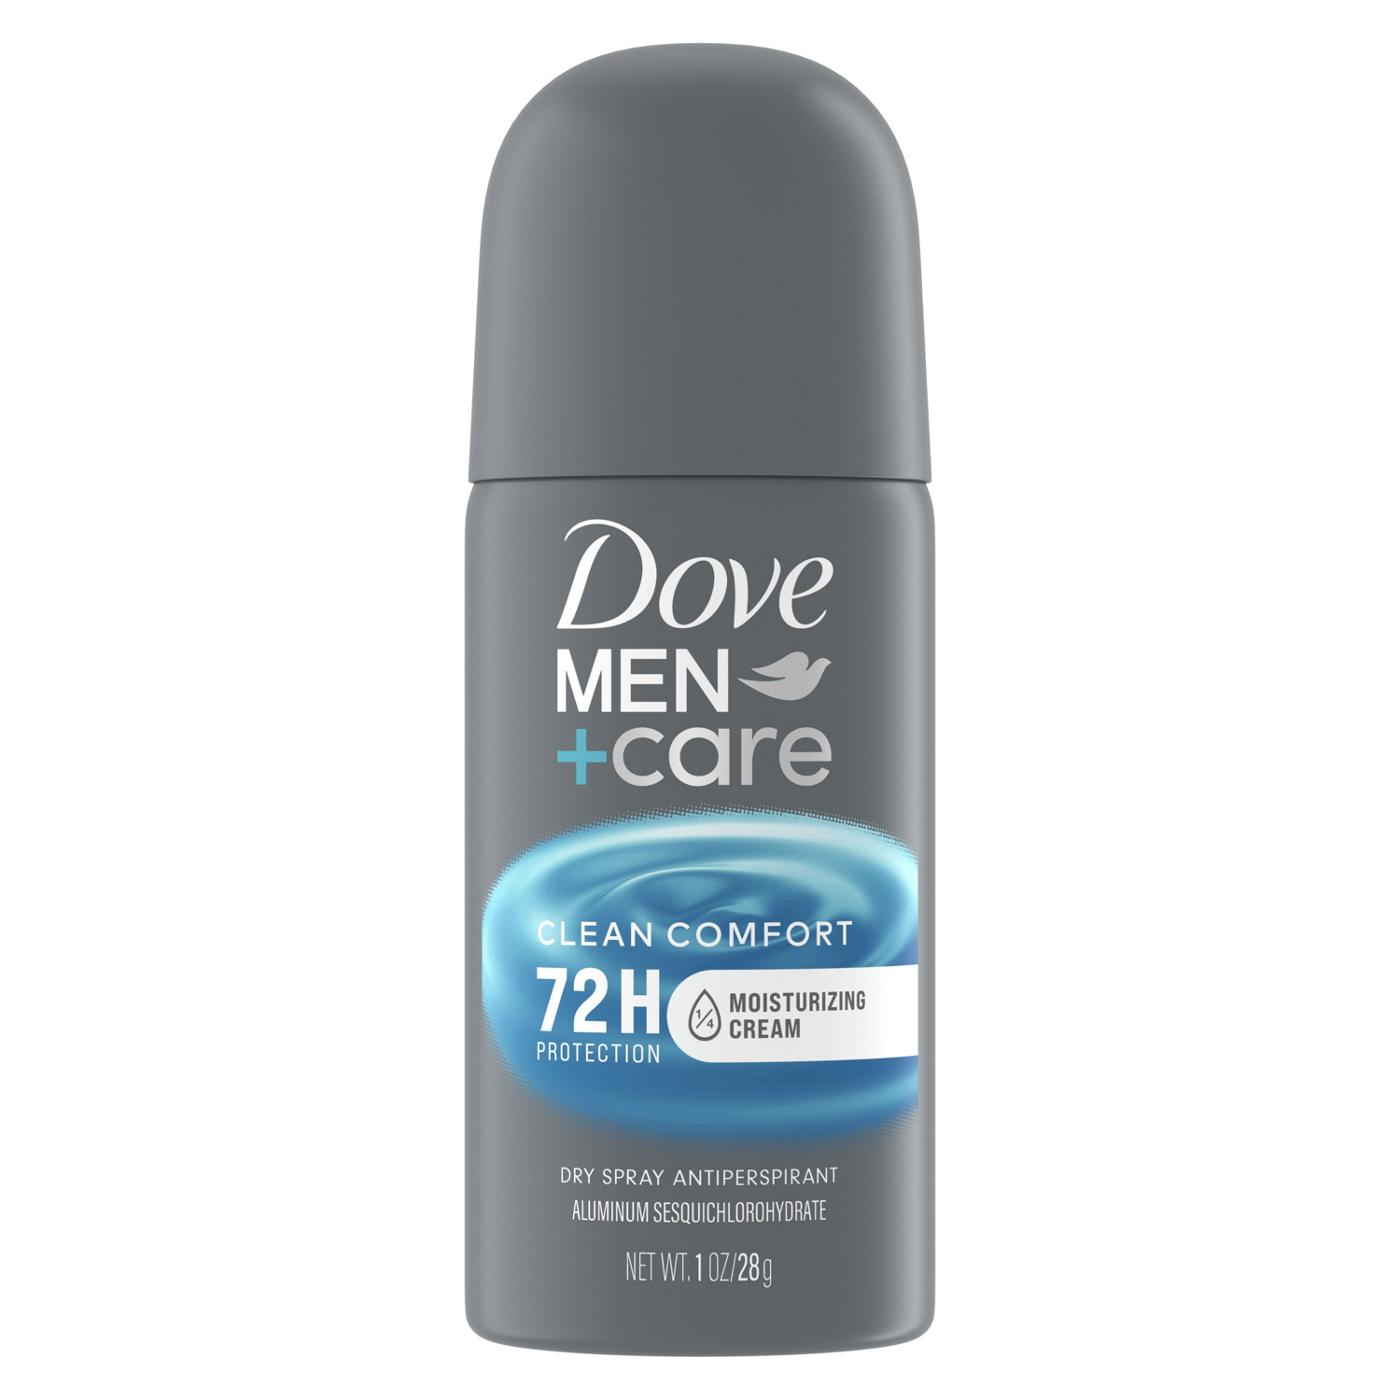 Dove Men+Care Antiperspirant Deodorant Dry Spray - Clean Comfort Shop Deodorant & Antiperspirant at H-E-B